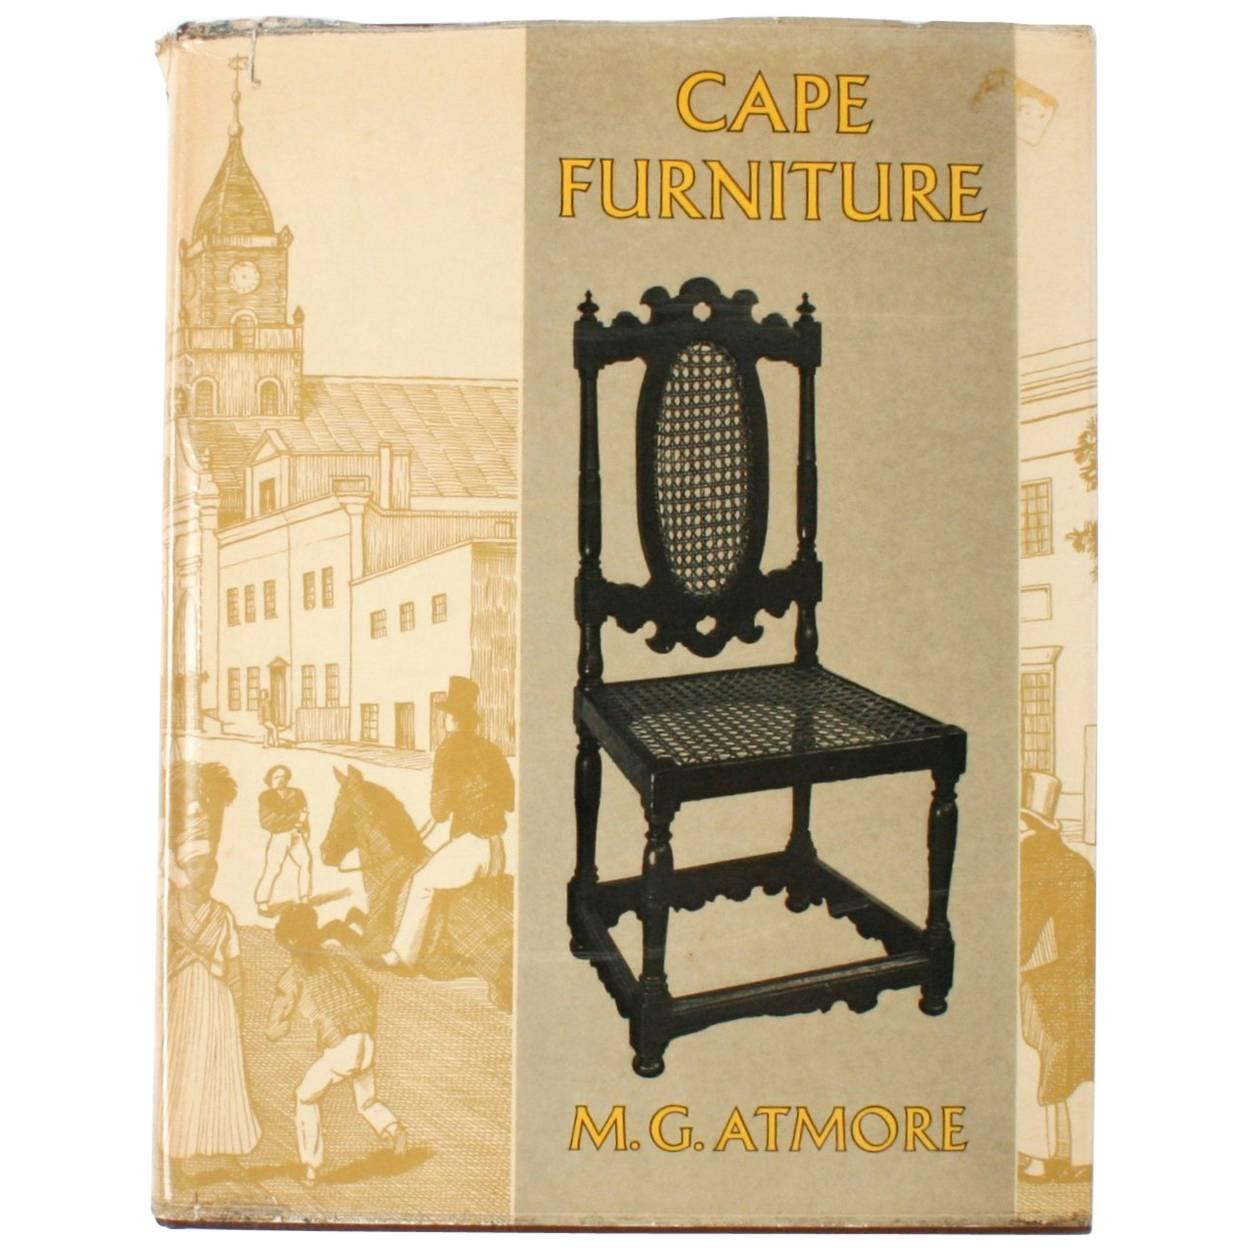 "Cape Furniture" Book by M. G. Atmore